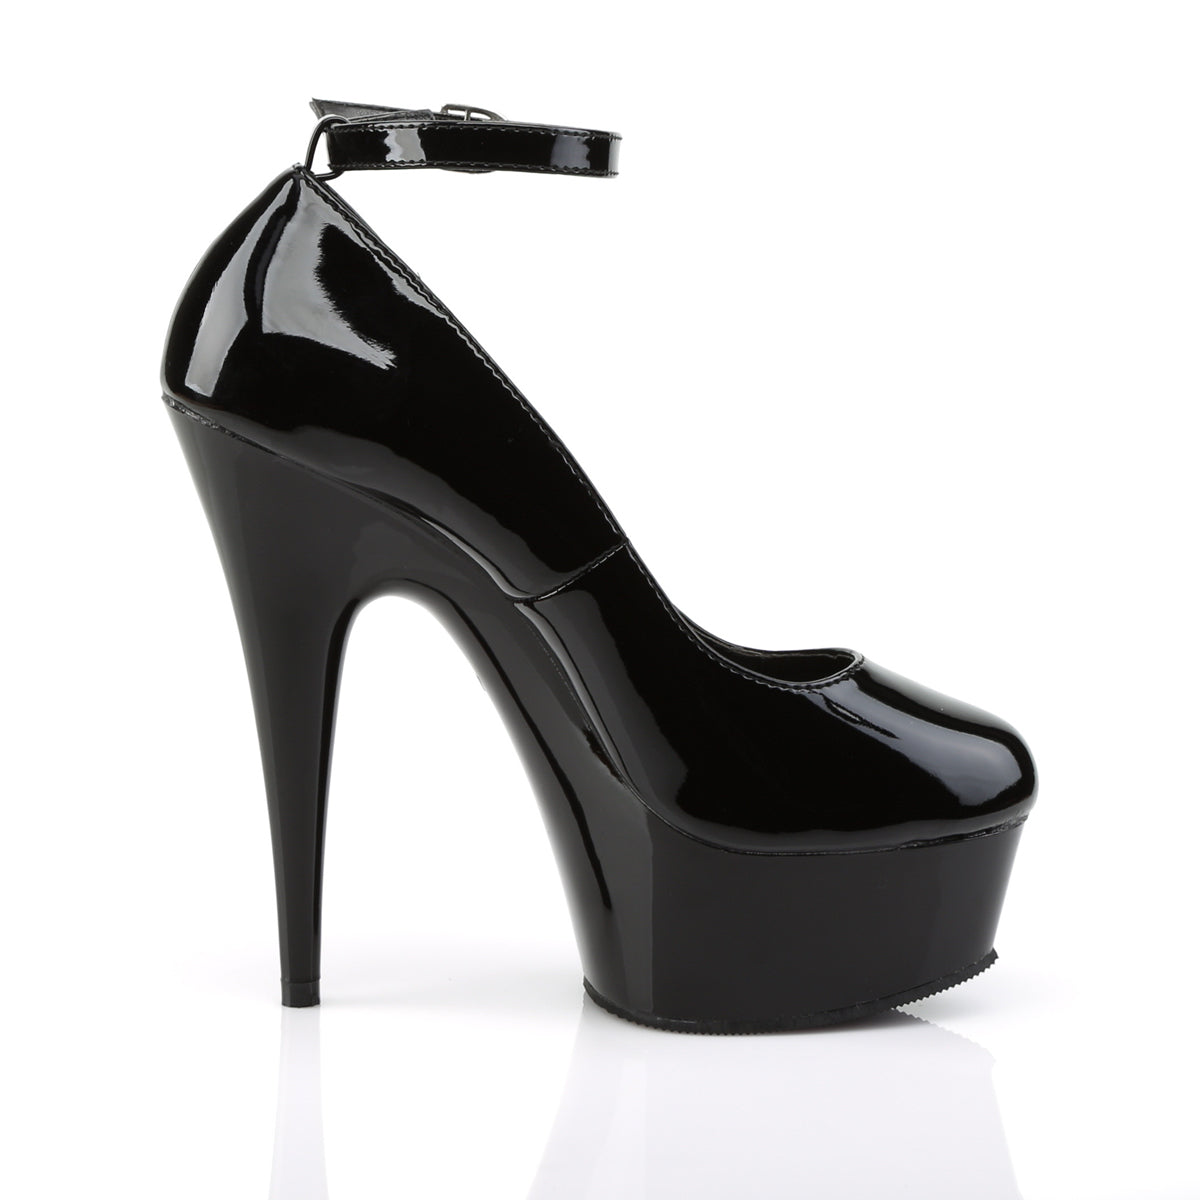 DELIGHT-686 6" Heel Black Patent Pole Dancing Platforms-Pleaser- Sexy Shoes Fetish Heels